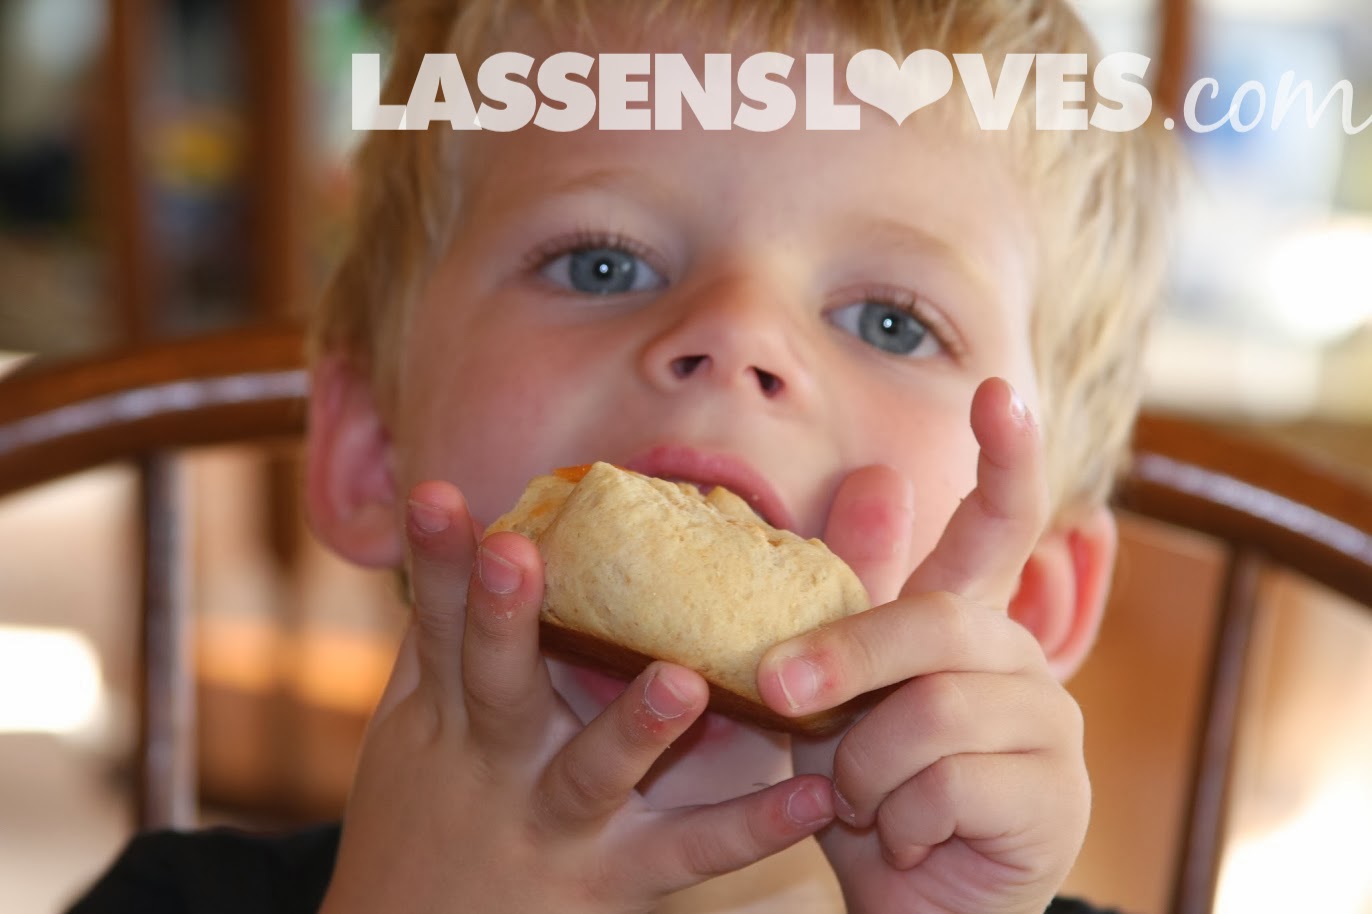 lassensloves.com, Lassen's, Lassens, healthy+lunches, lunch+ideas, lunch+rolls, lunch+pockets